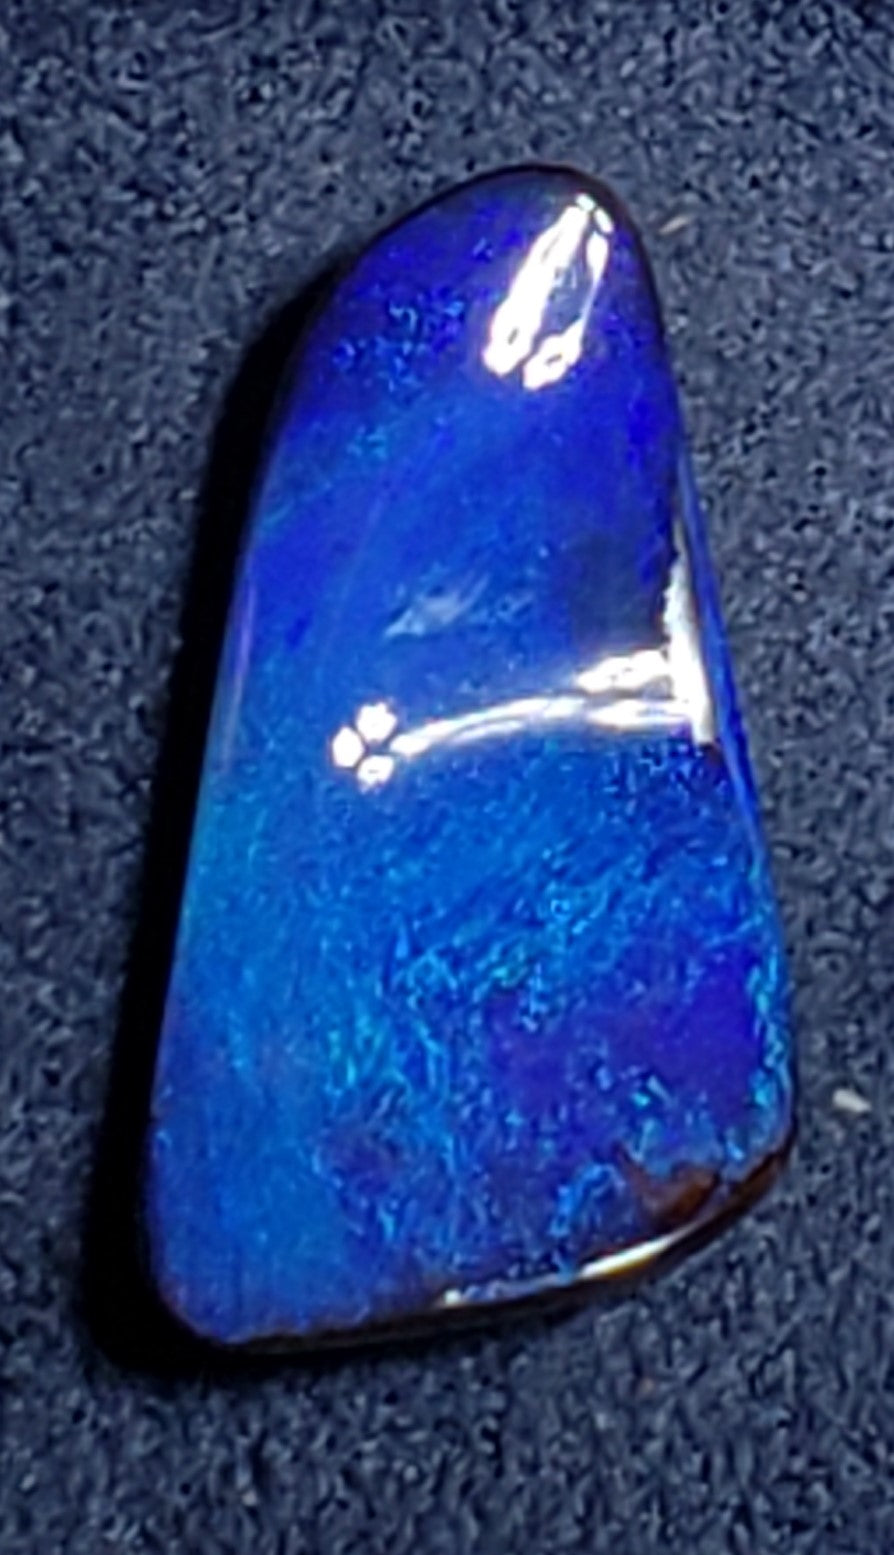 Boulder Opal Loose stone